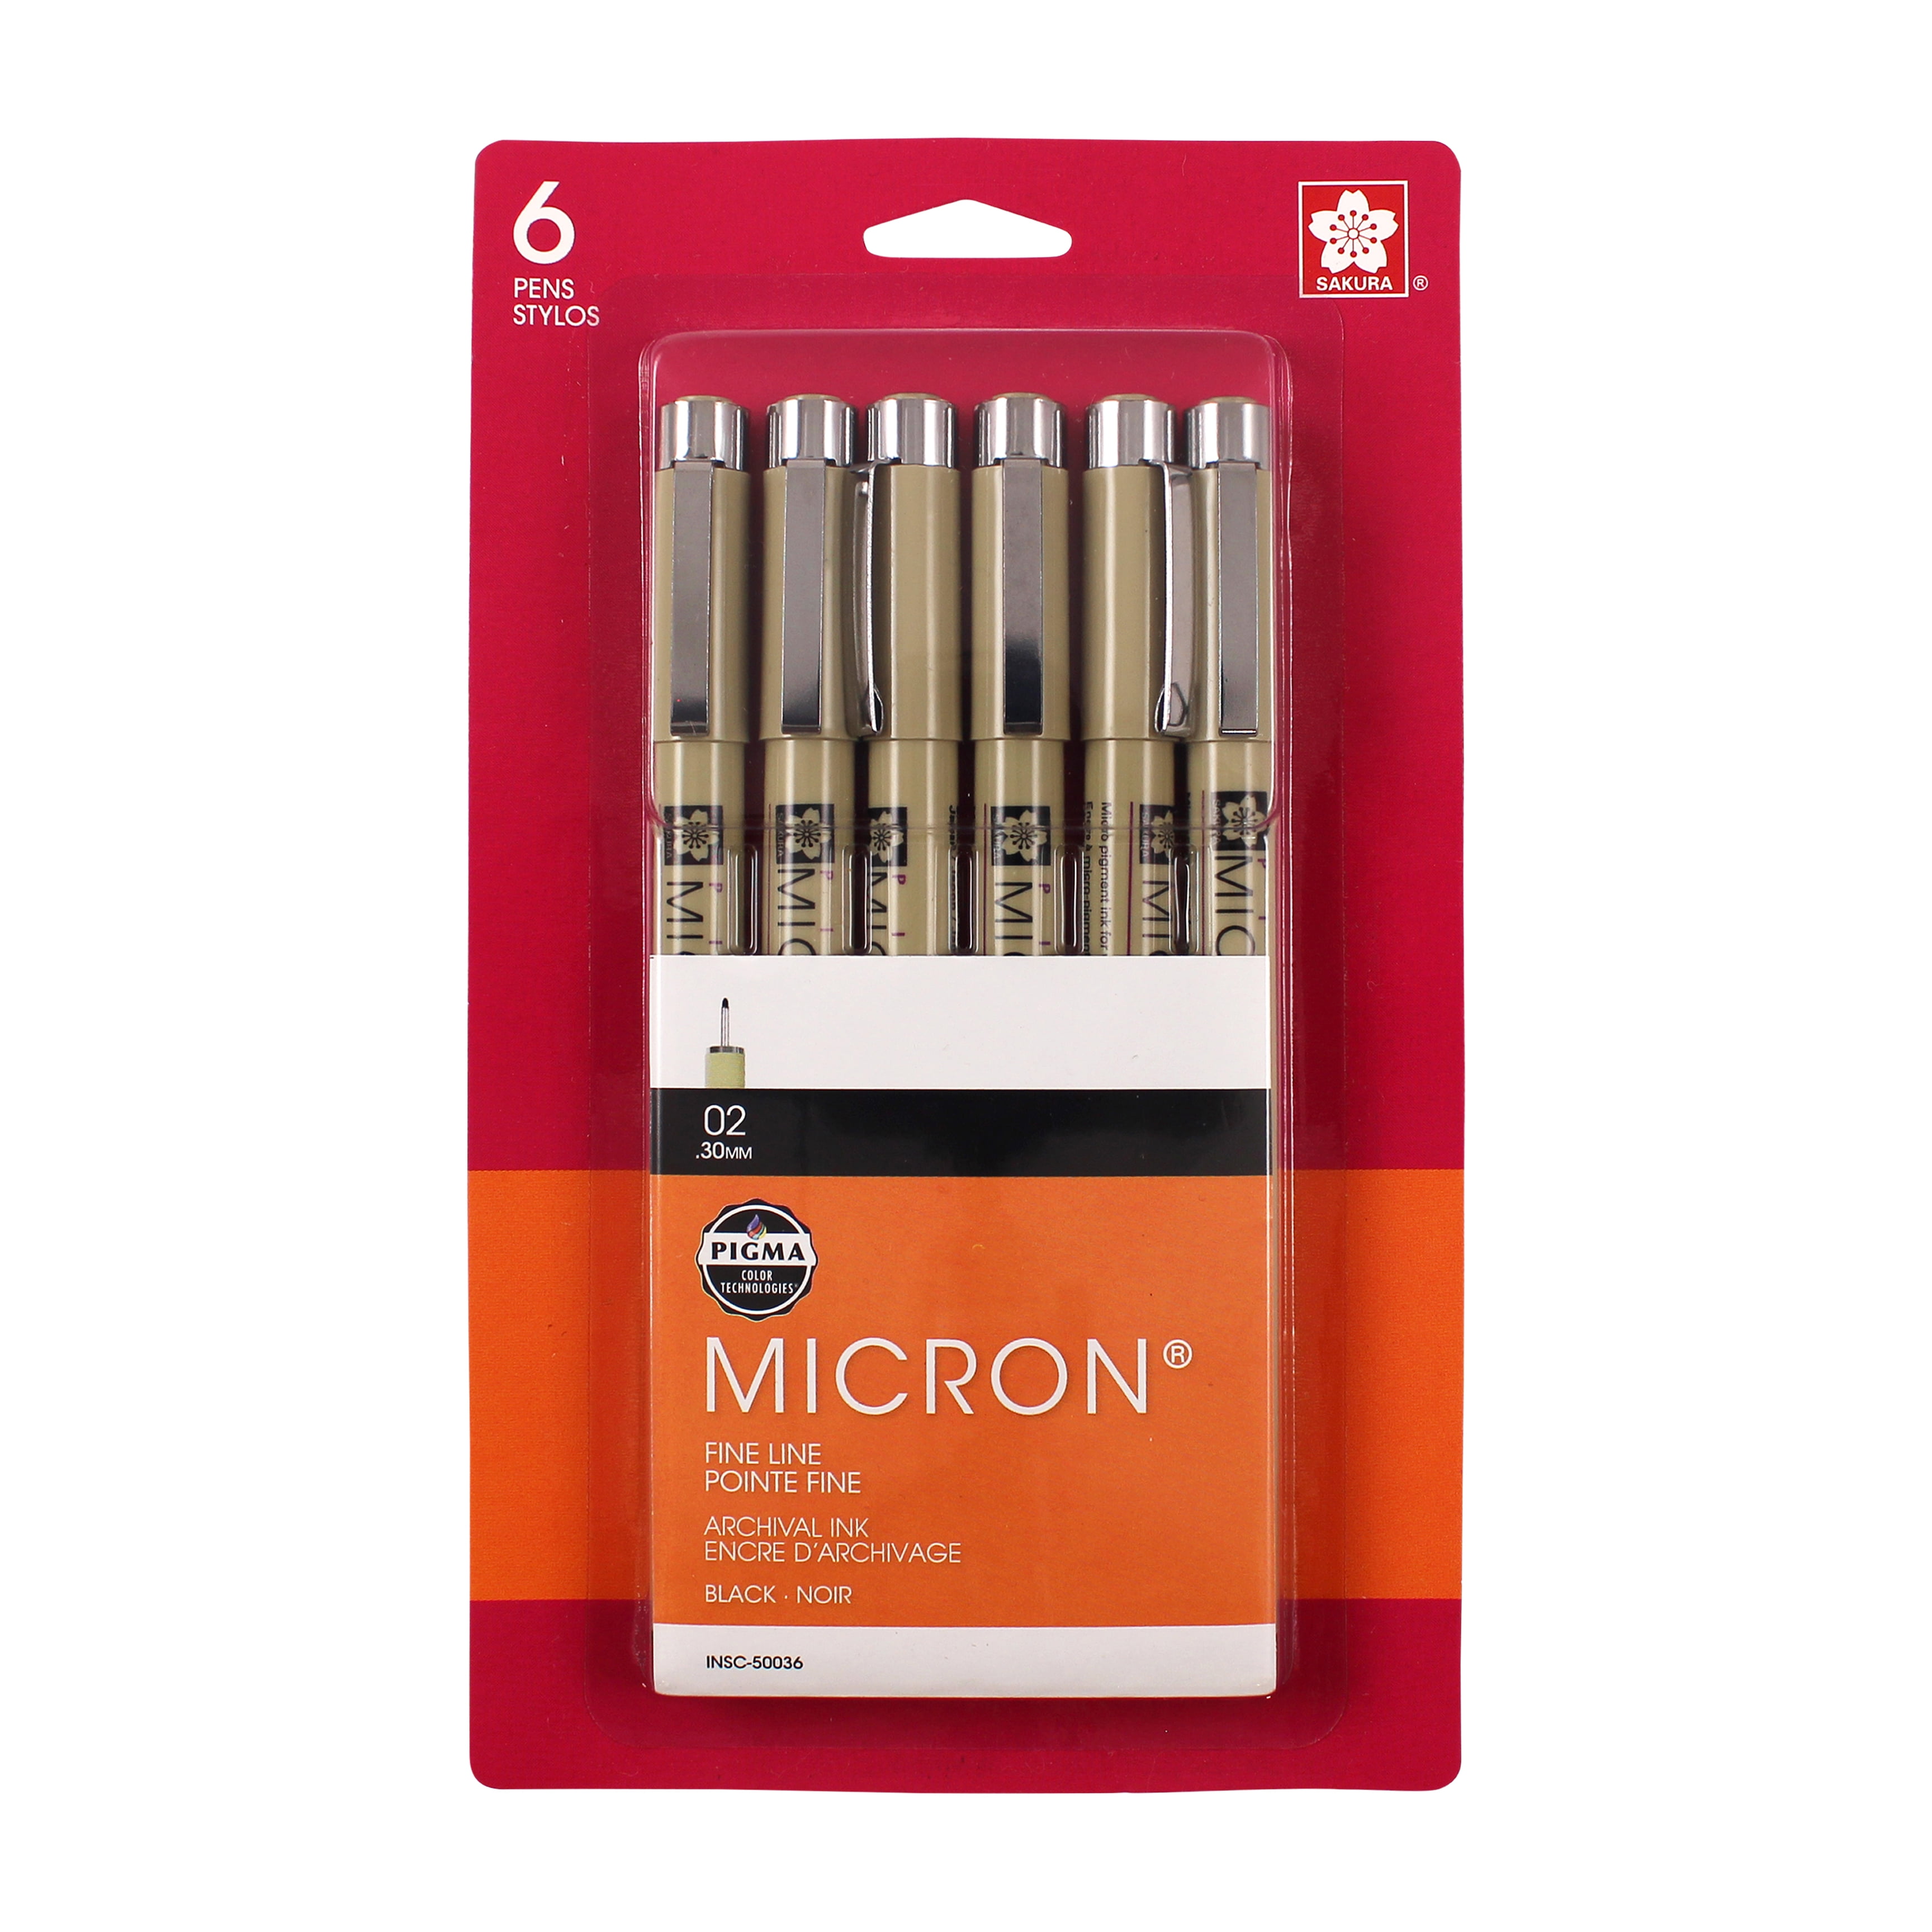 Arteza Micro-Line Ink Pens, Set of 10 Black Fineliners, Sizes 005, 01, 02, 03